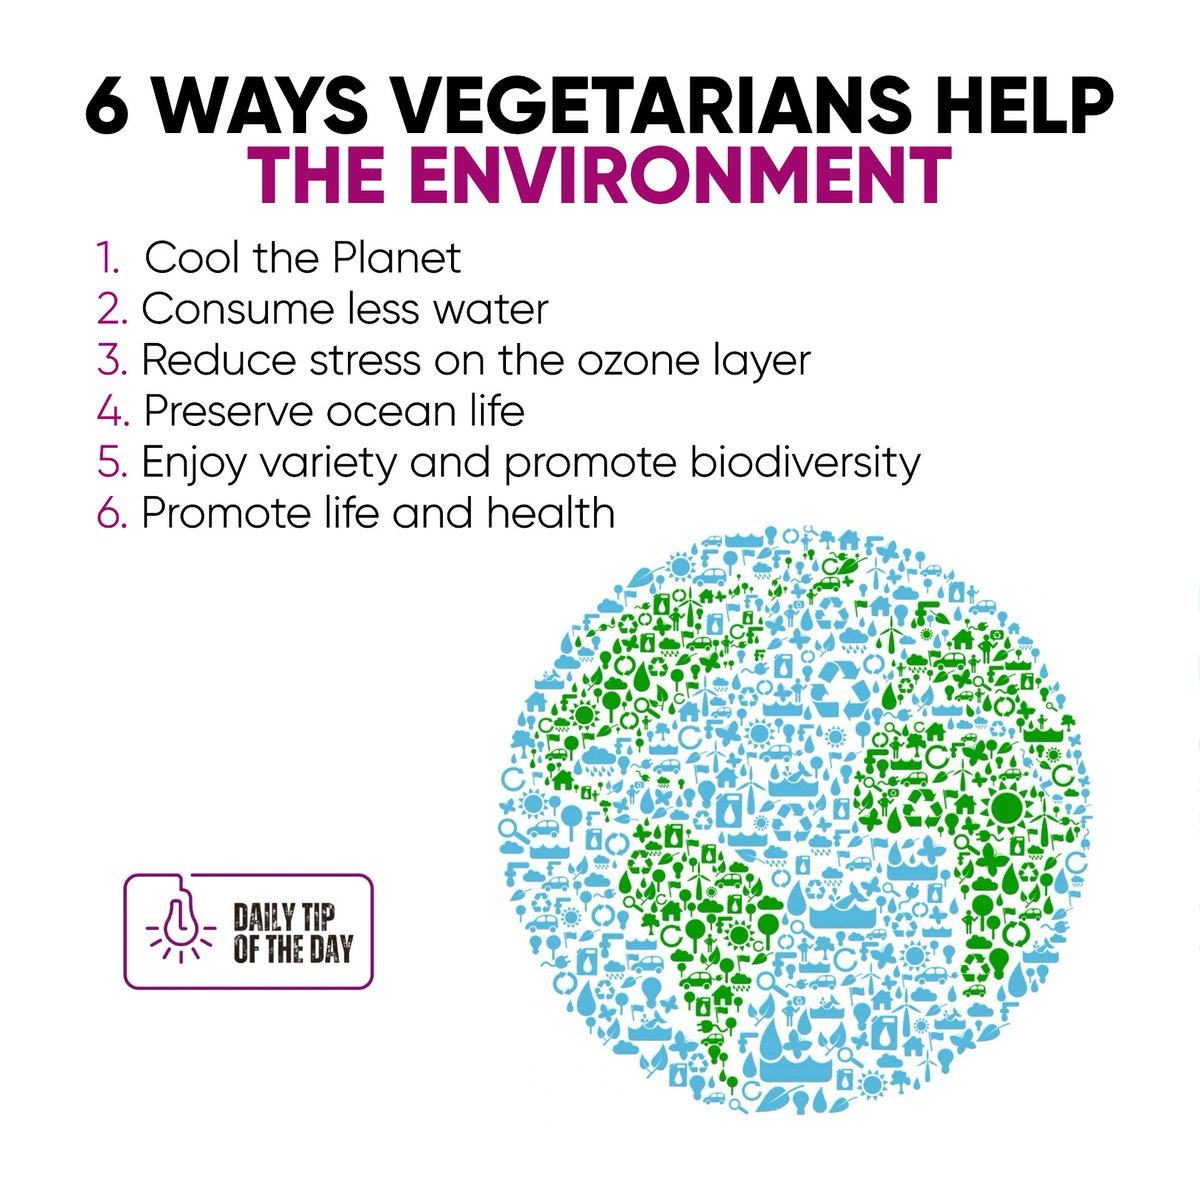 6 ways vegetarians help the environment.

#ecoveggieefforts
#greenvegetarianliving
#ecofriendlyeating
#sustainableveggiechoices
#veggieecowarriors
#plantpoweredplanet